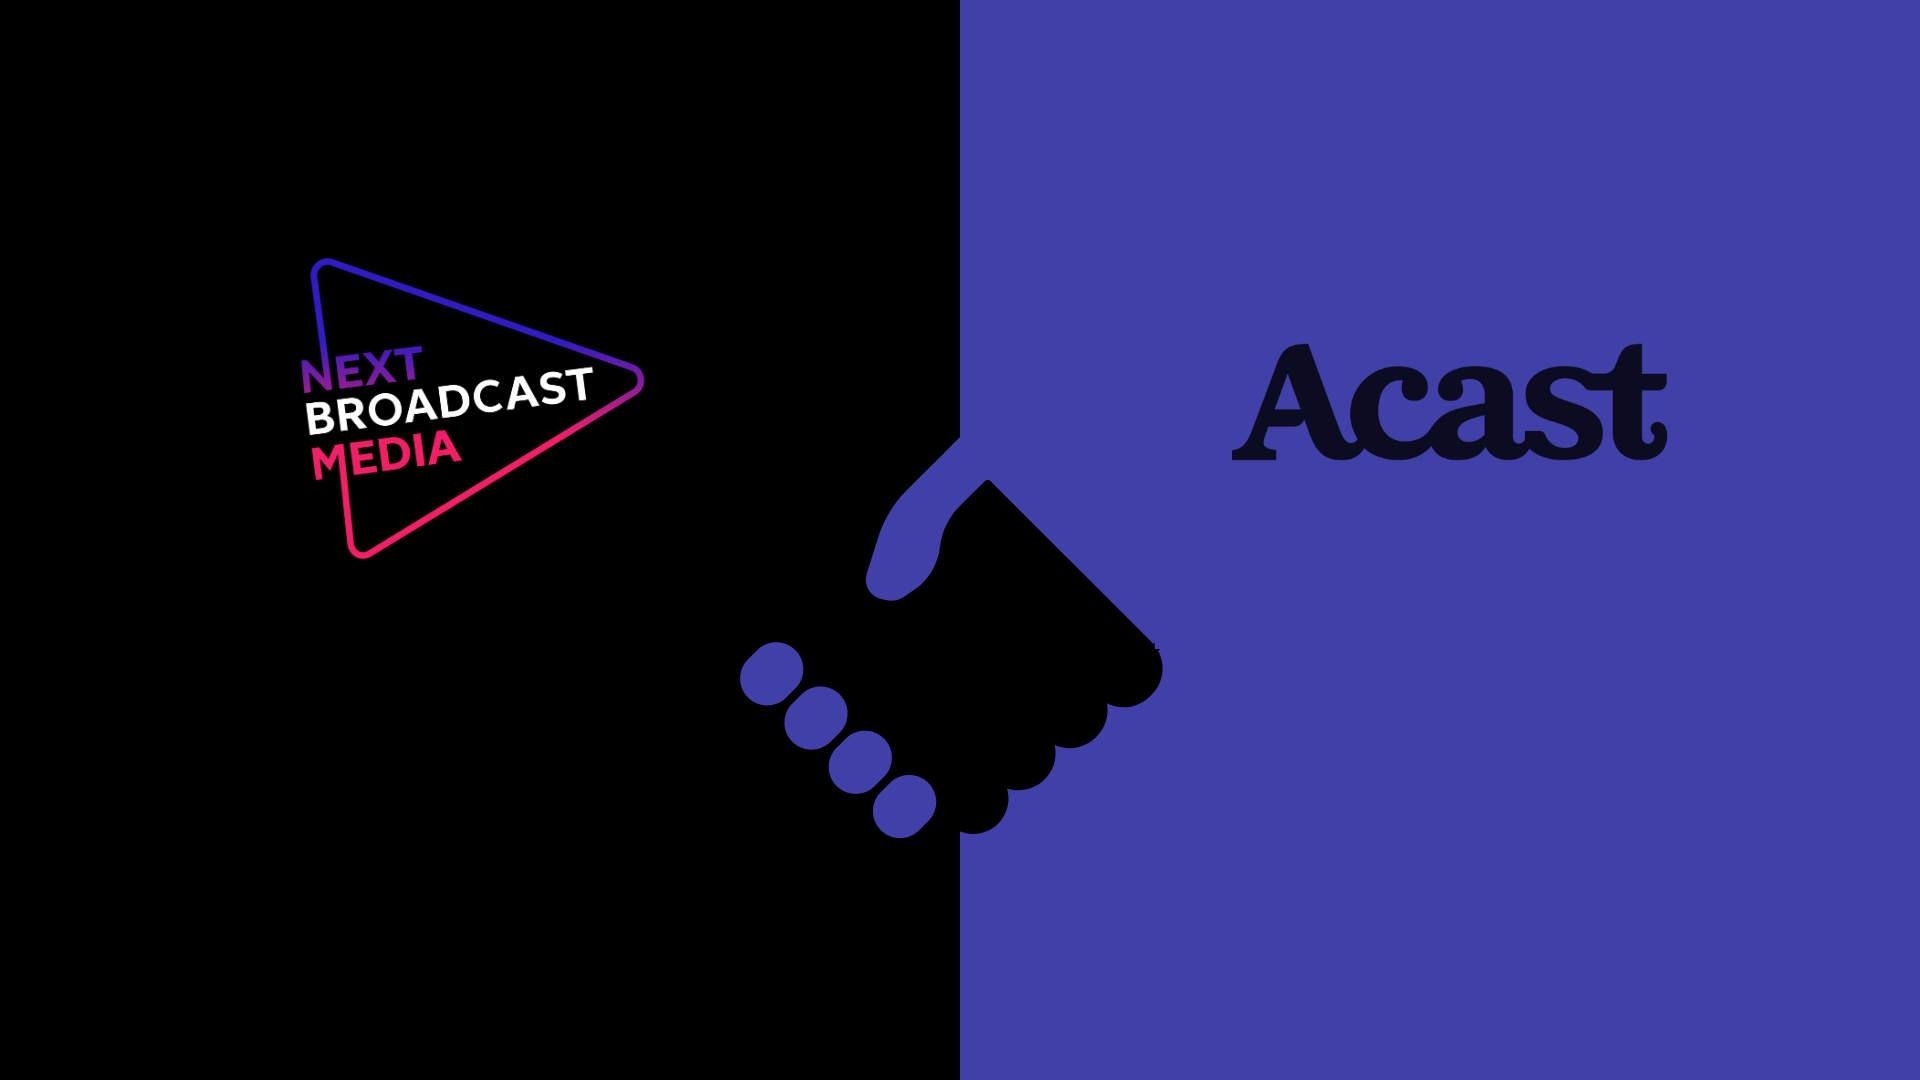 Acast Next Broadcast Media partnership